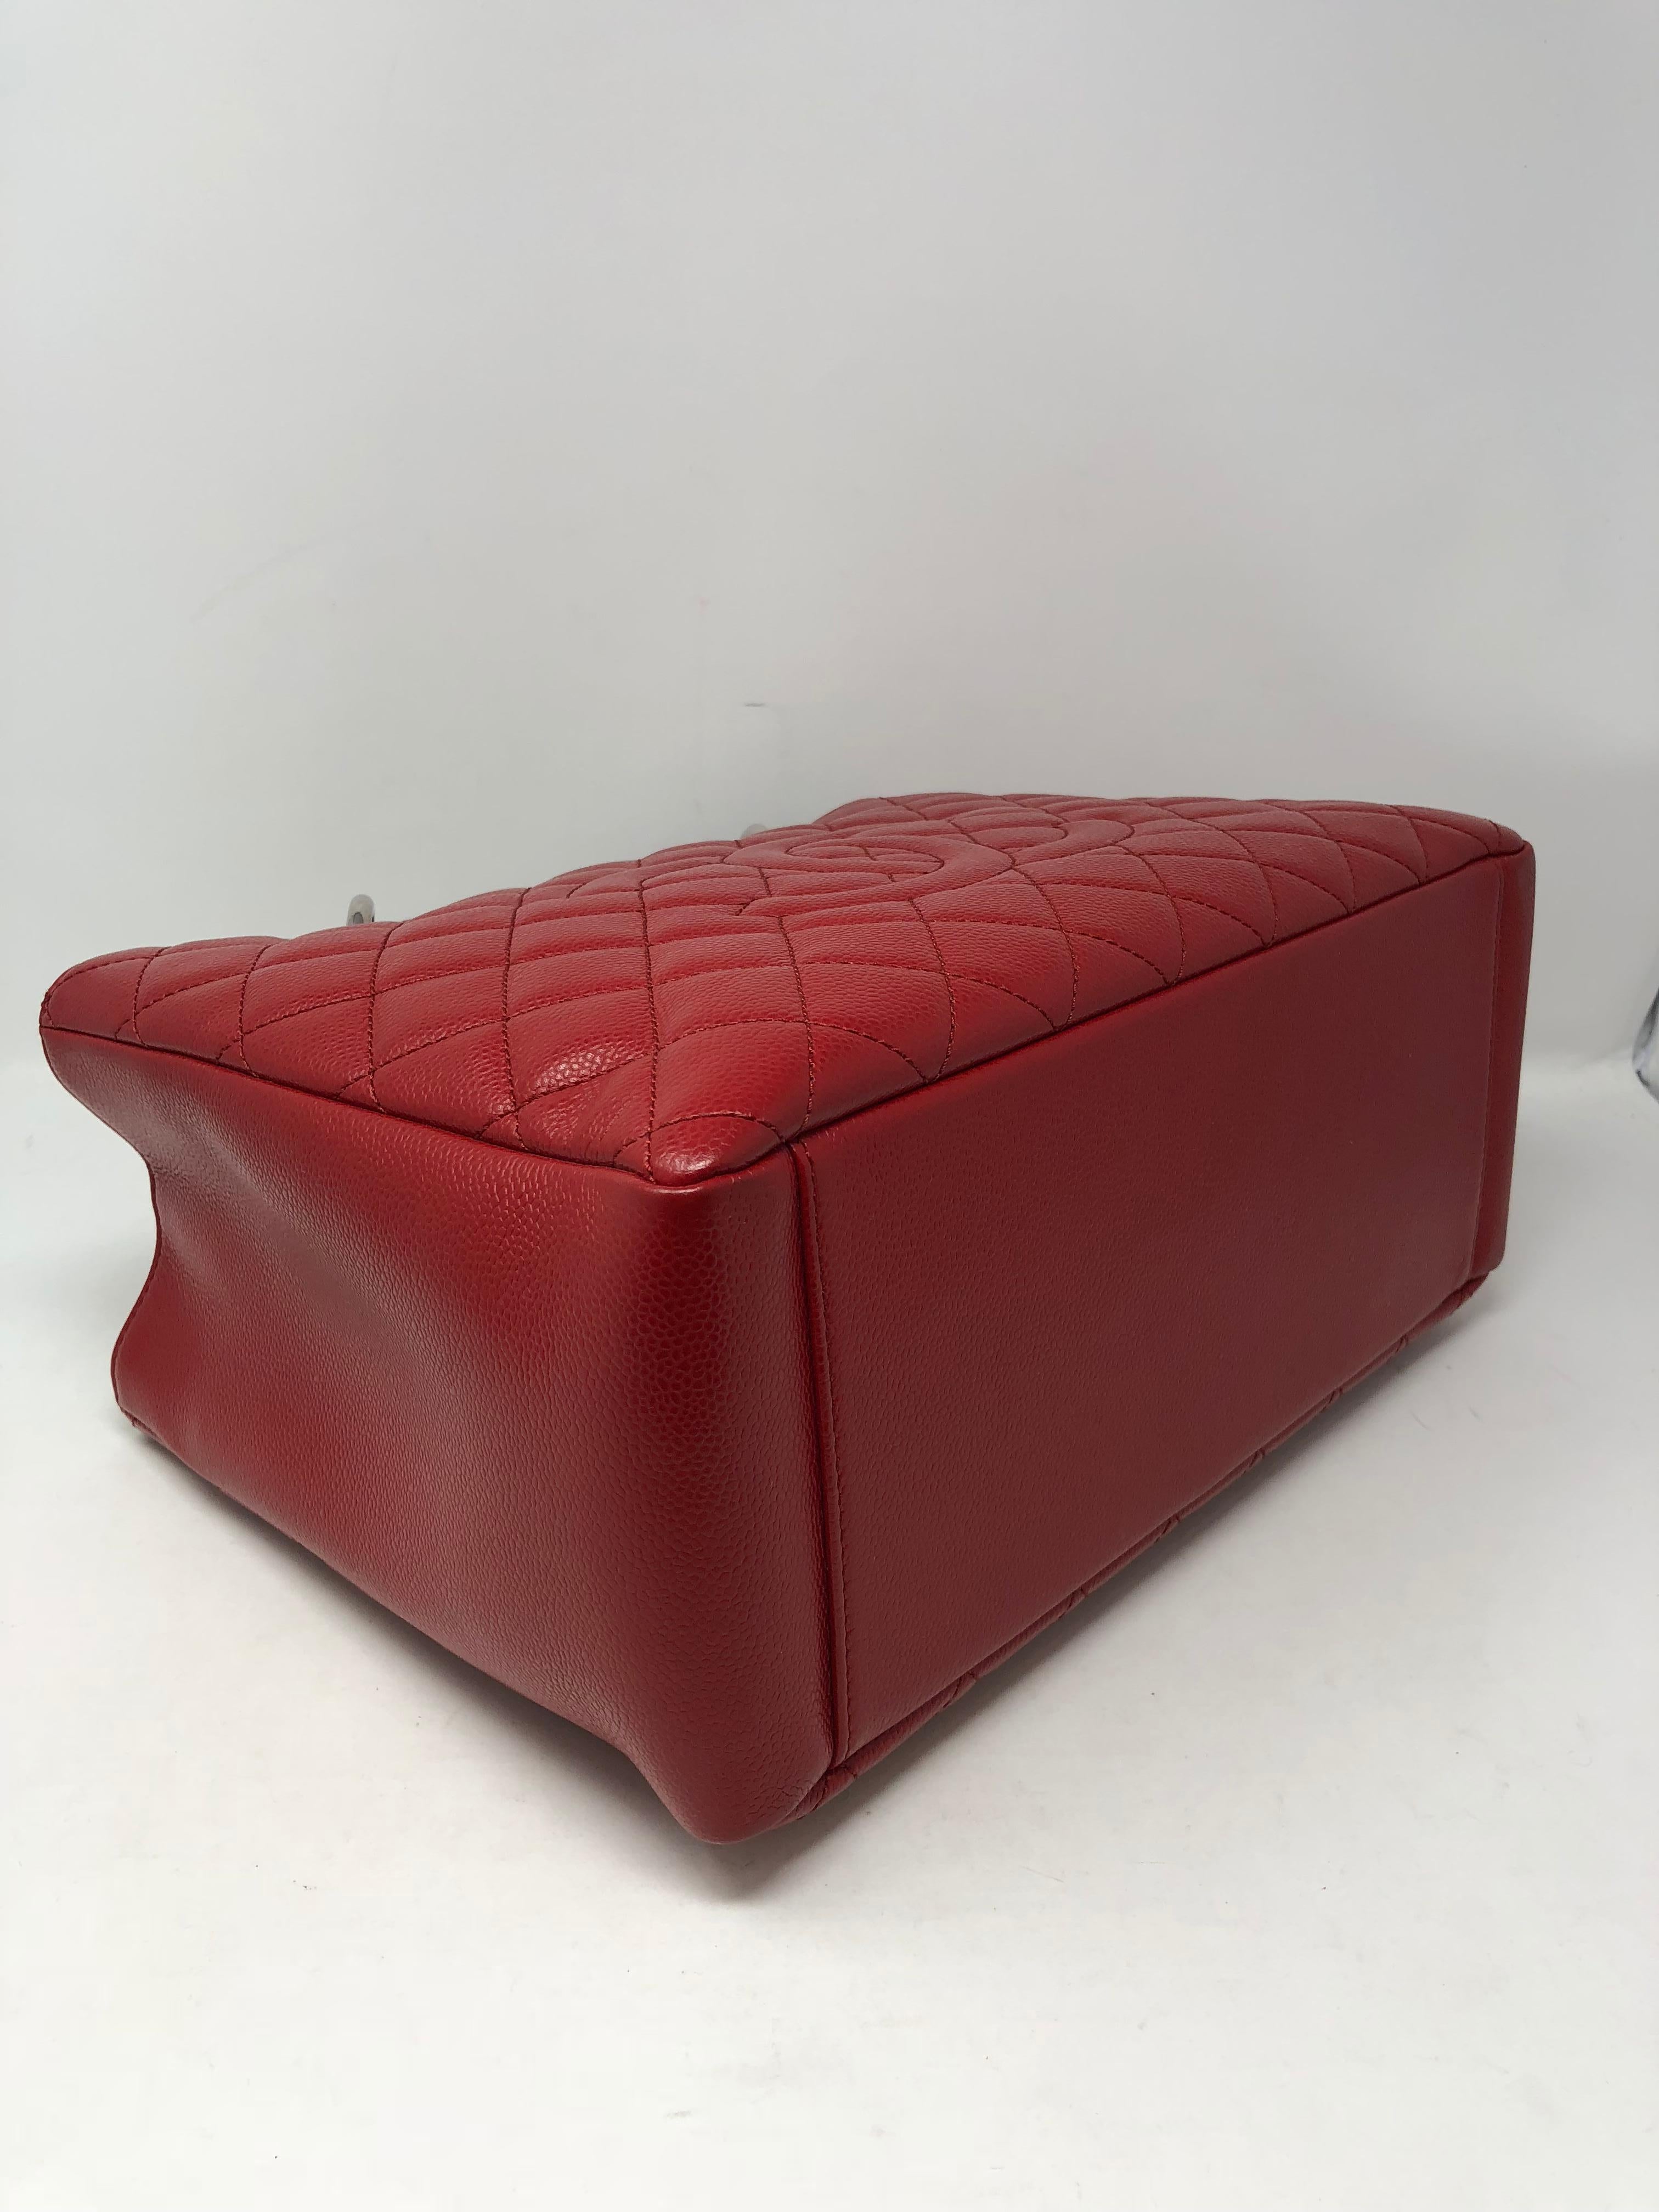 Chanel Red Grand Shopper Tote Bag 1